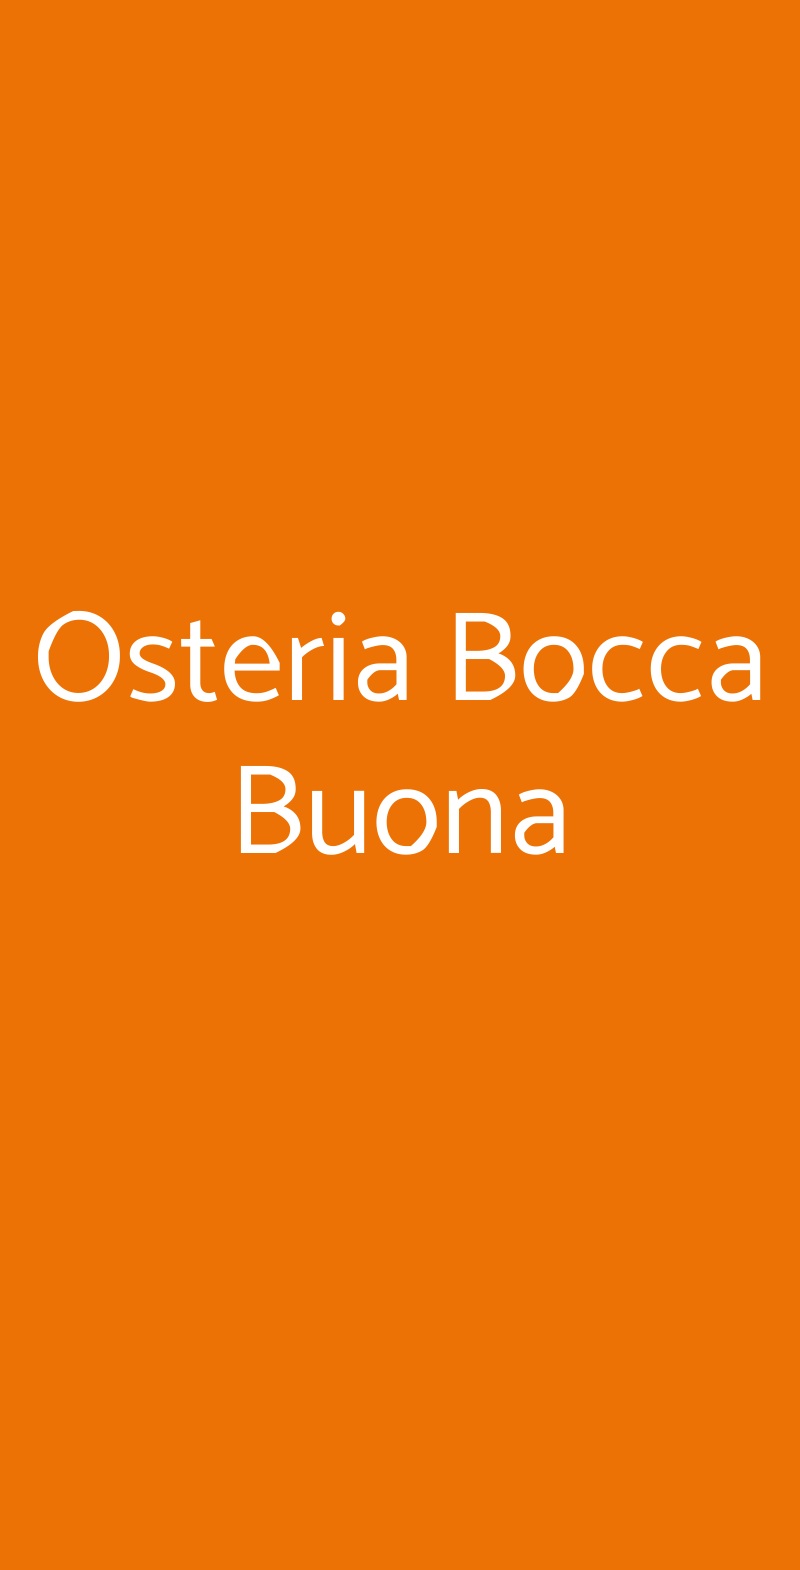 Osteria Bocca Buona Bologna menù 1 pagina